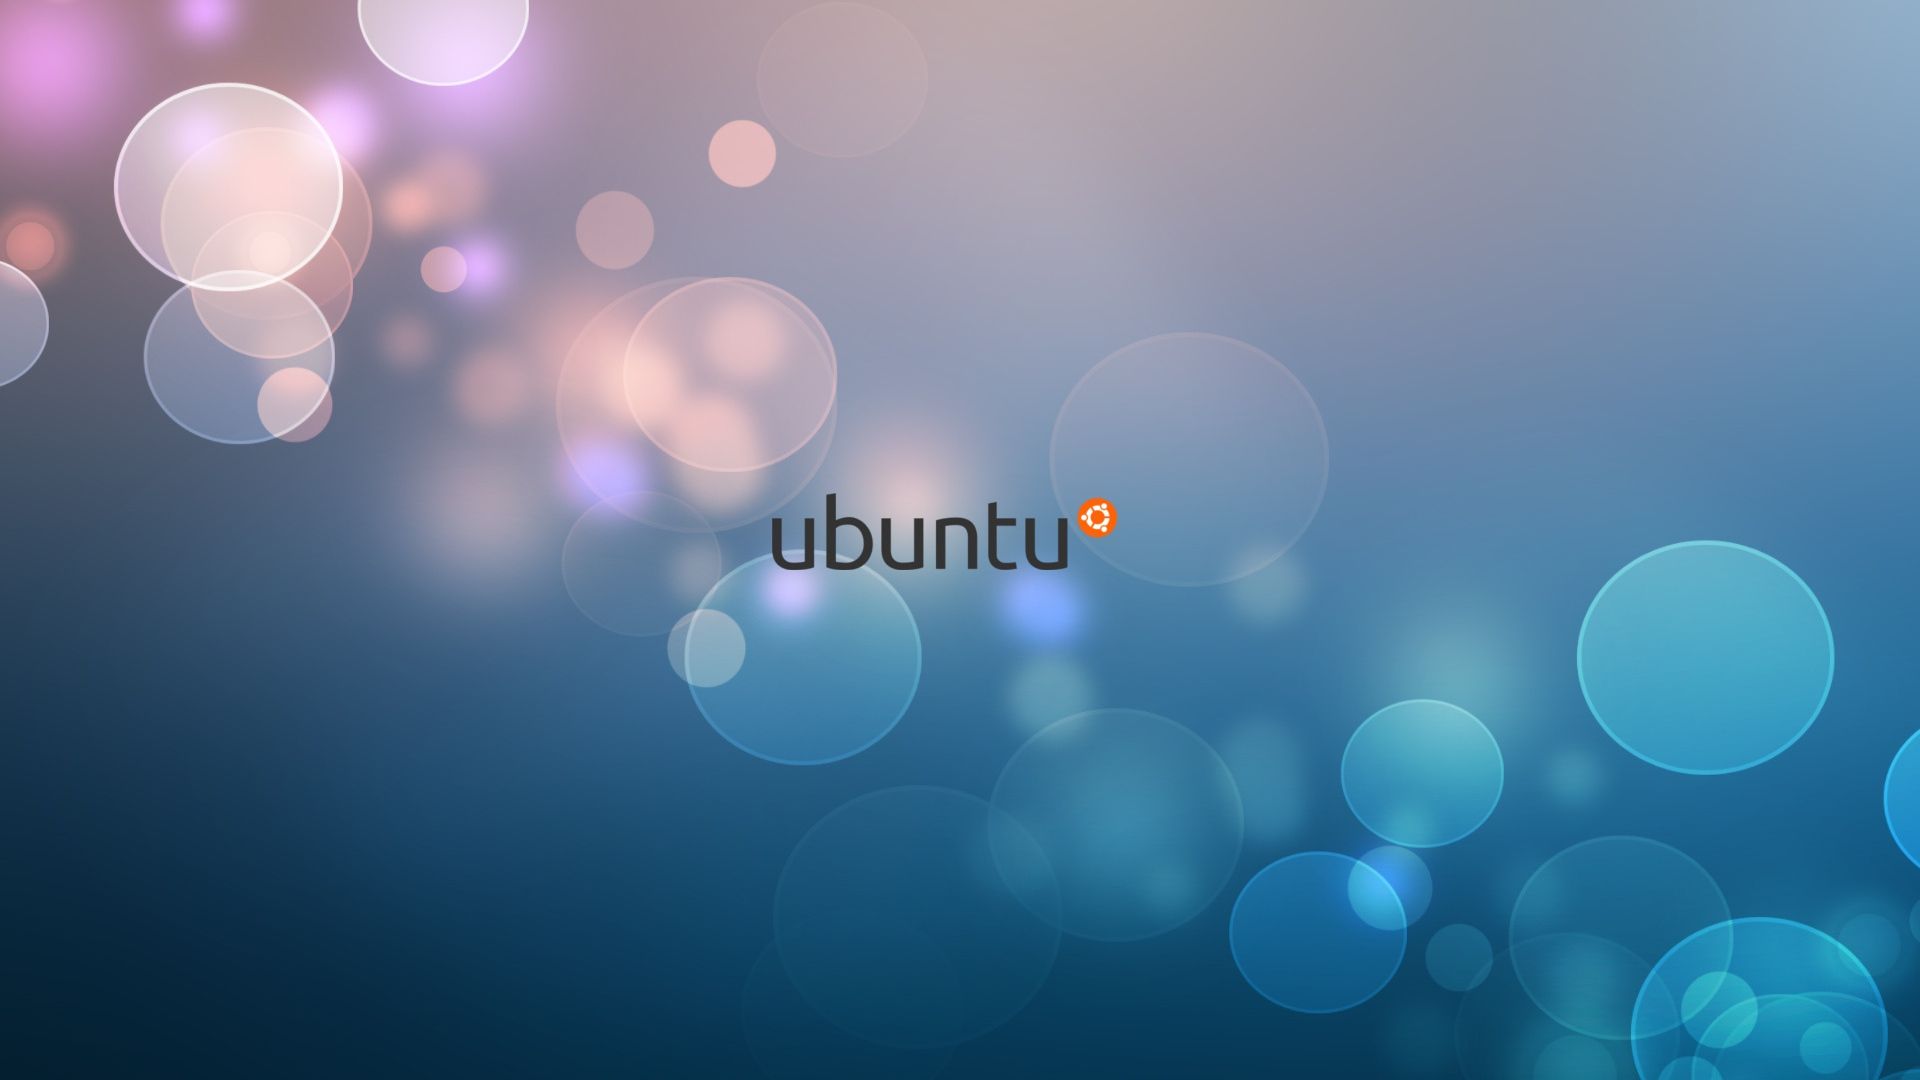 Download Wallpaper 1920x1080 Ubuntu, Bubbles, Linux Full HD 1080p ...